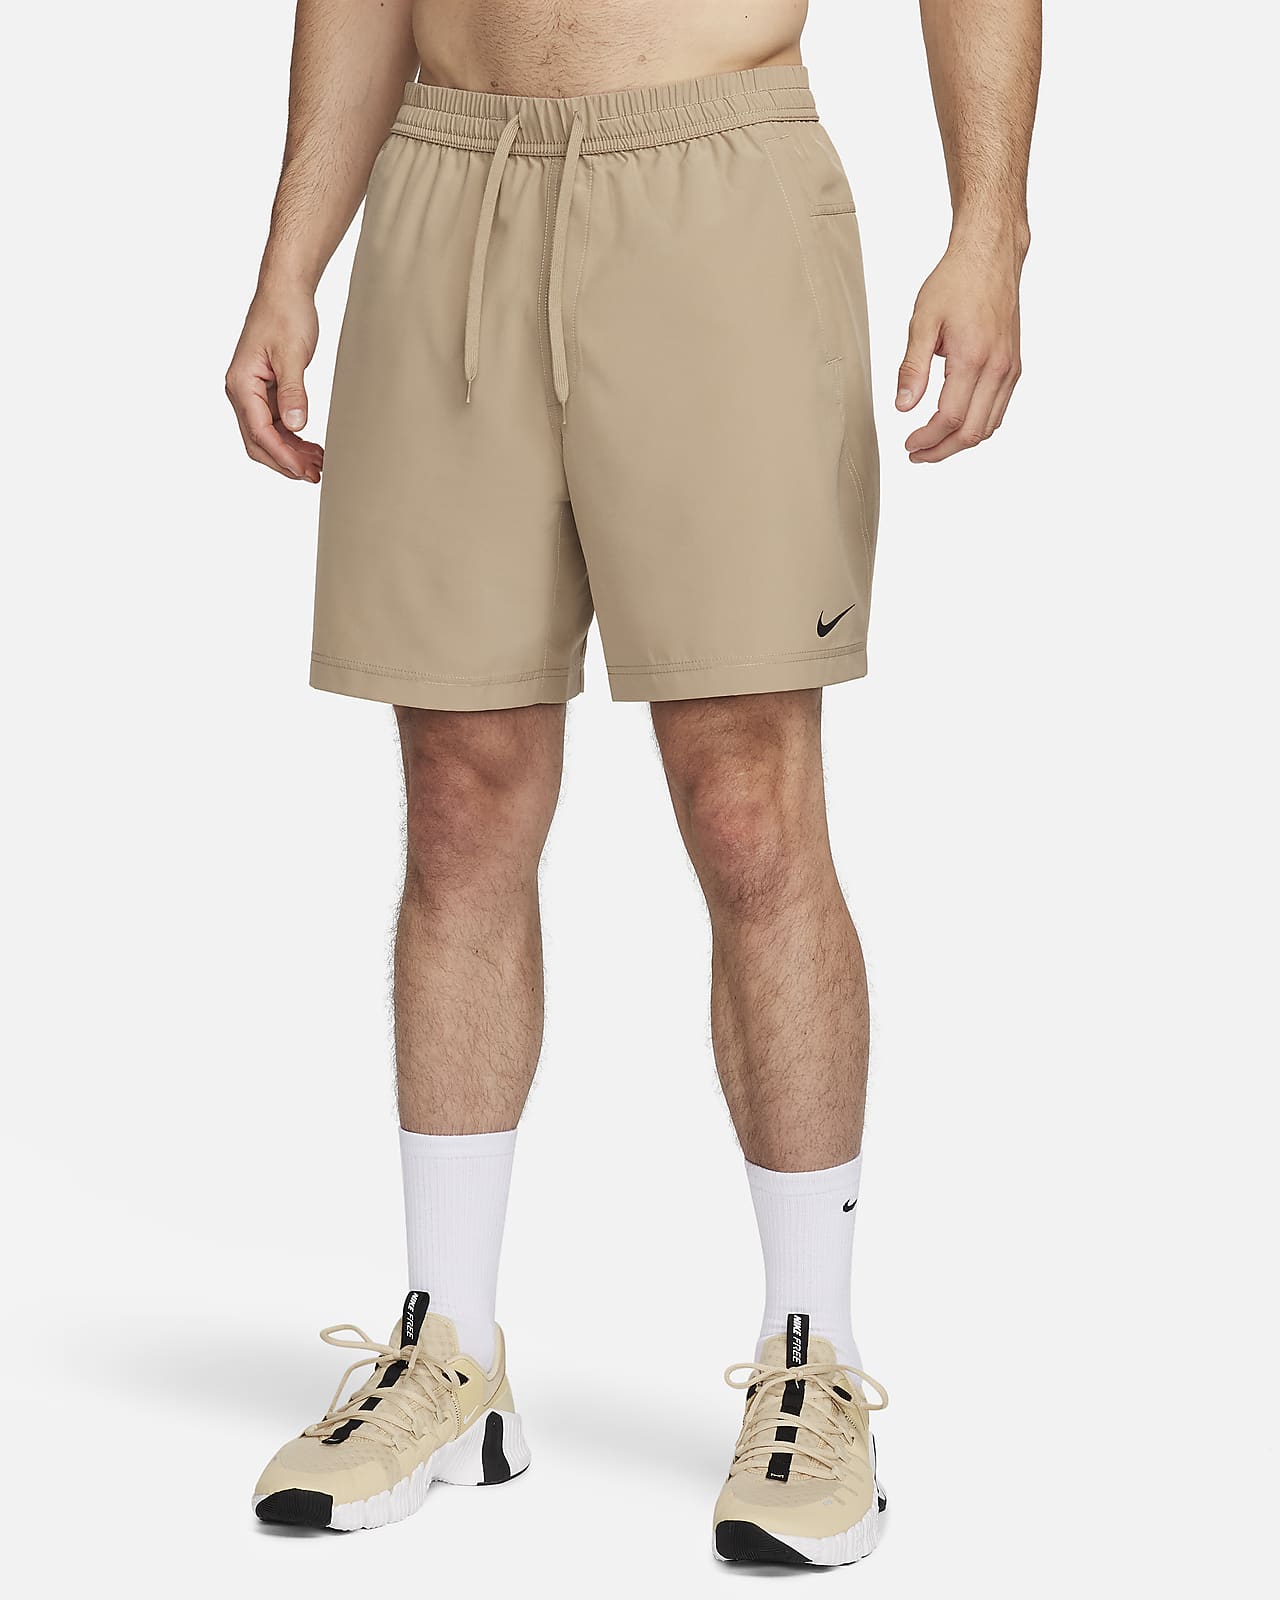 Odd Sox Active Shorts for Men